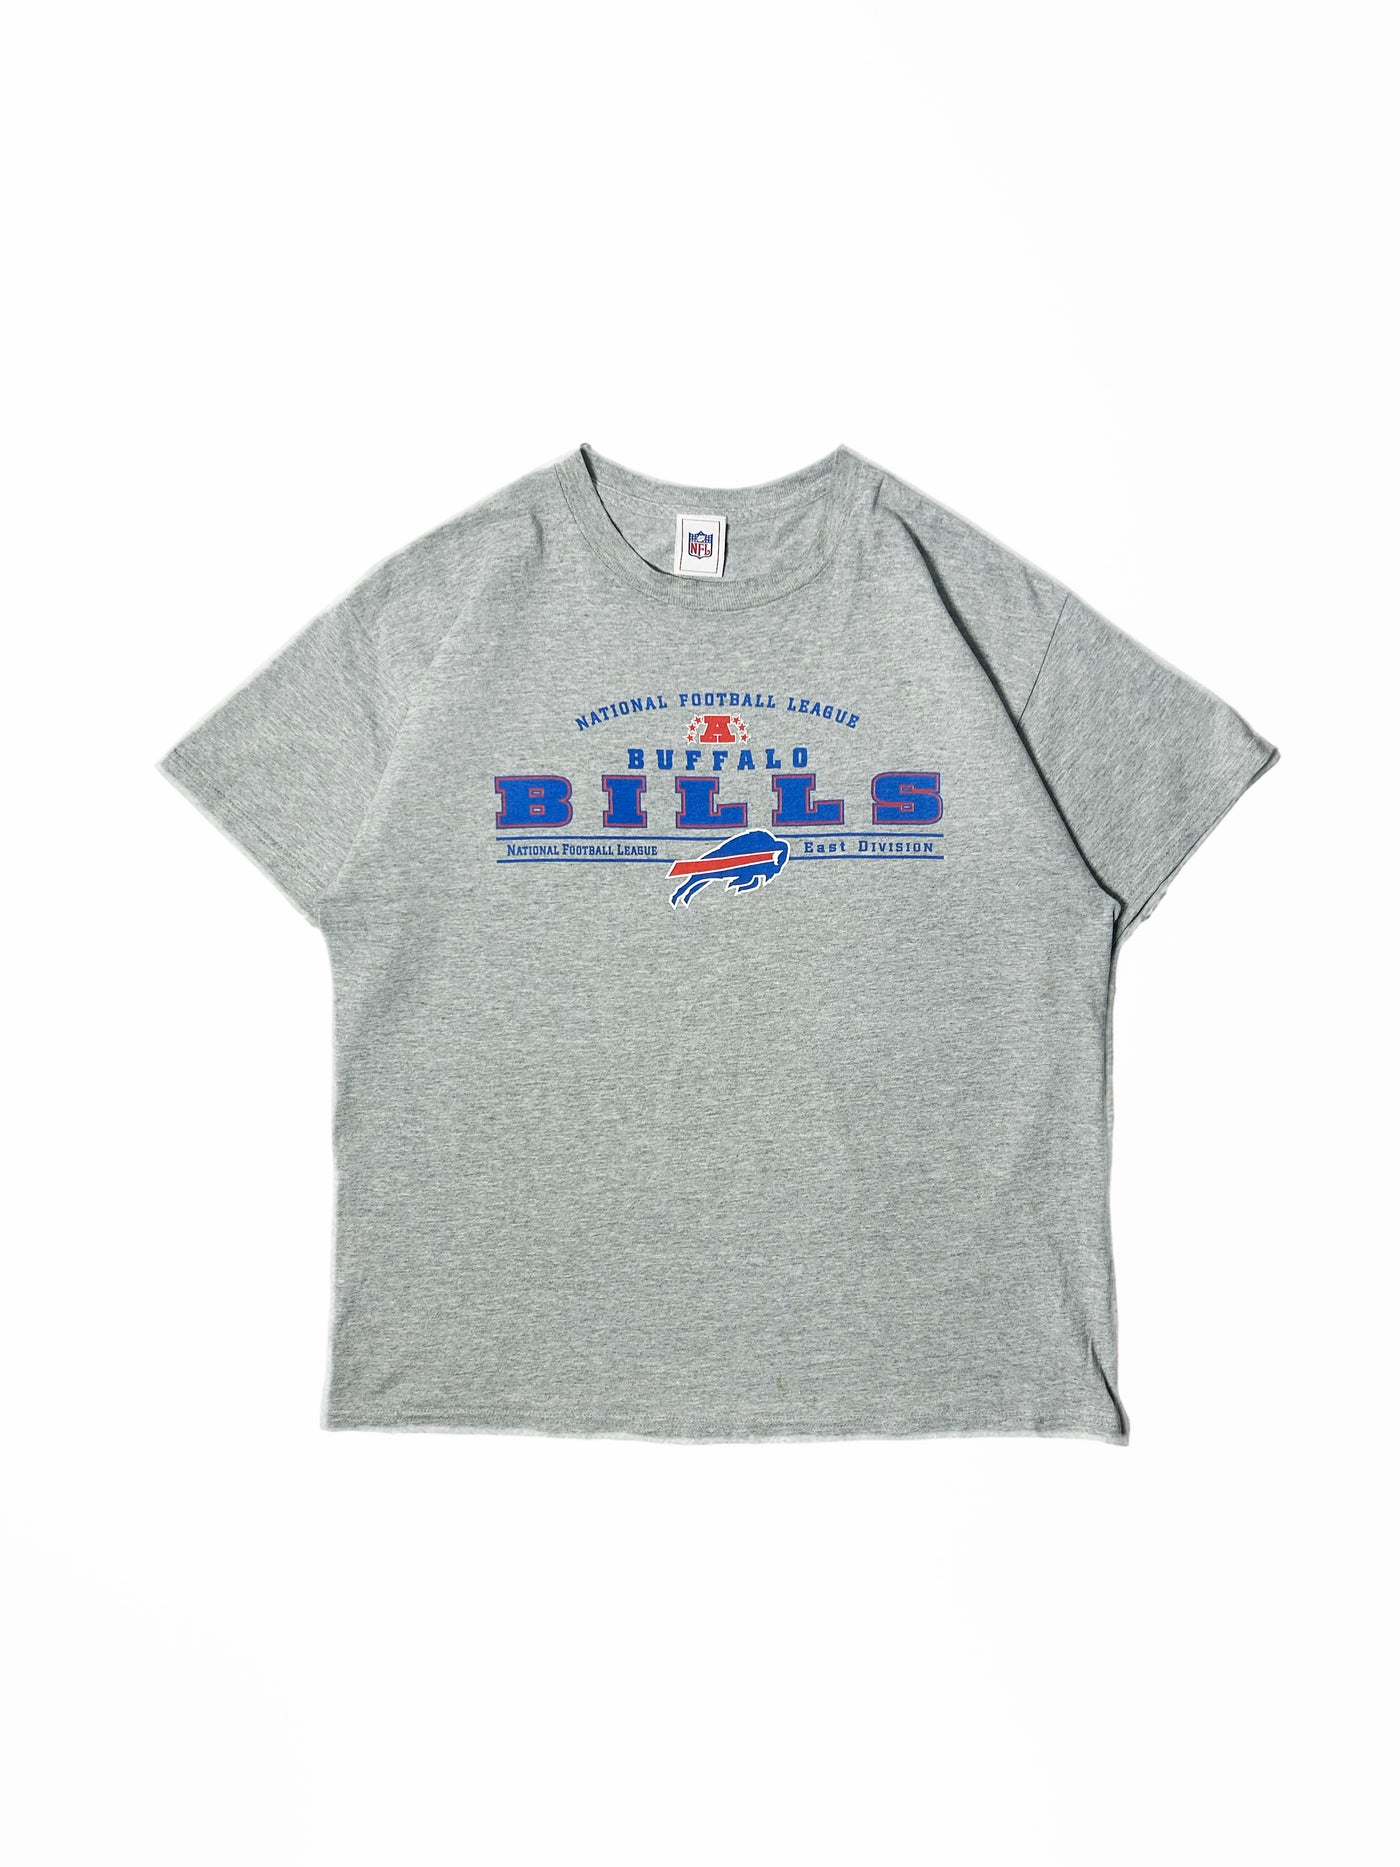 2000's Buffalo Bills T-Shirt